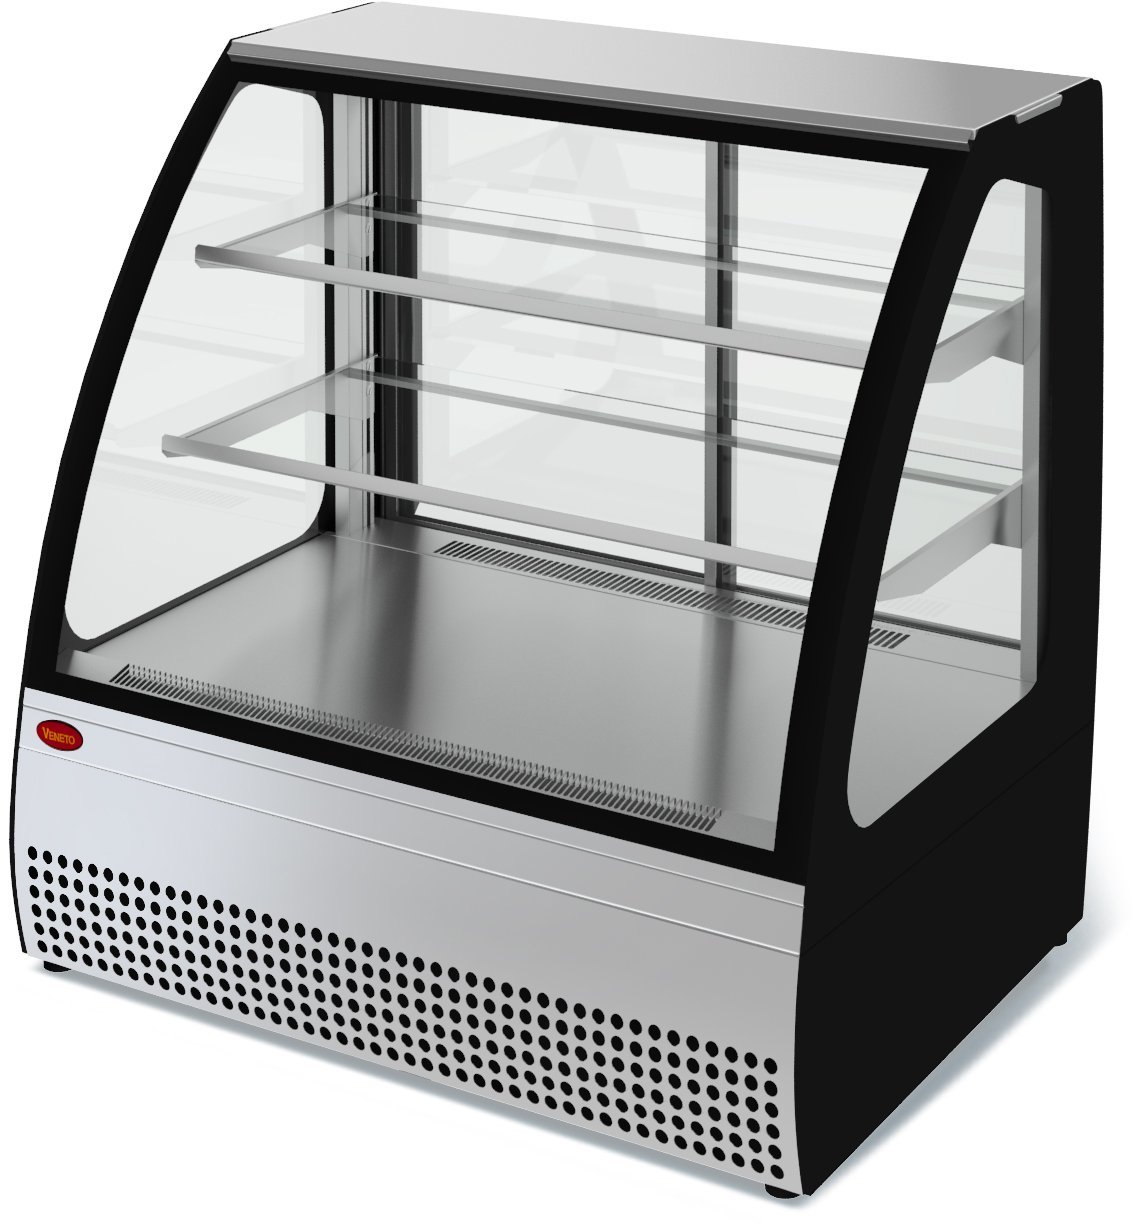 Холодильная витрина Veneto VSn-0,95 (нерж.)